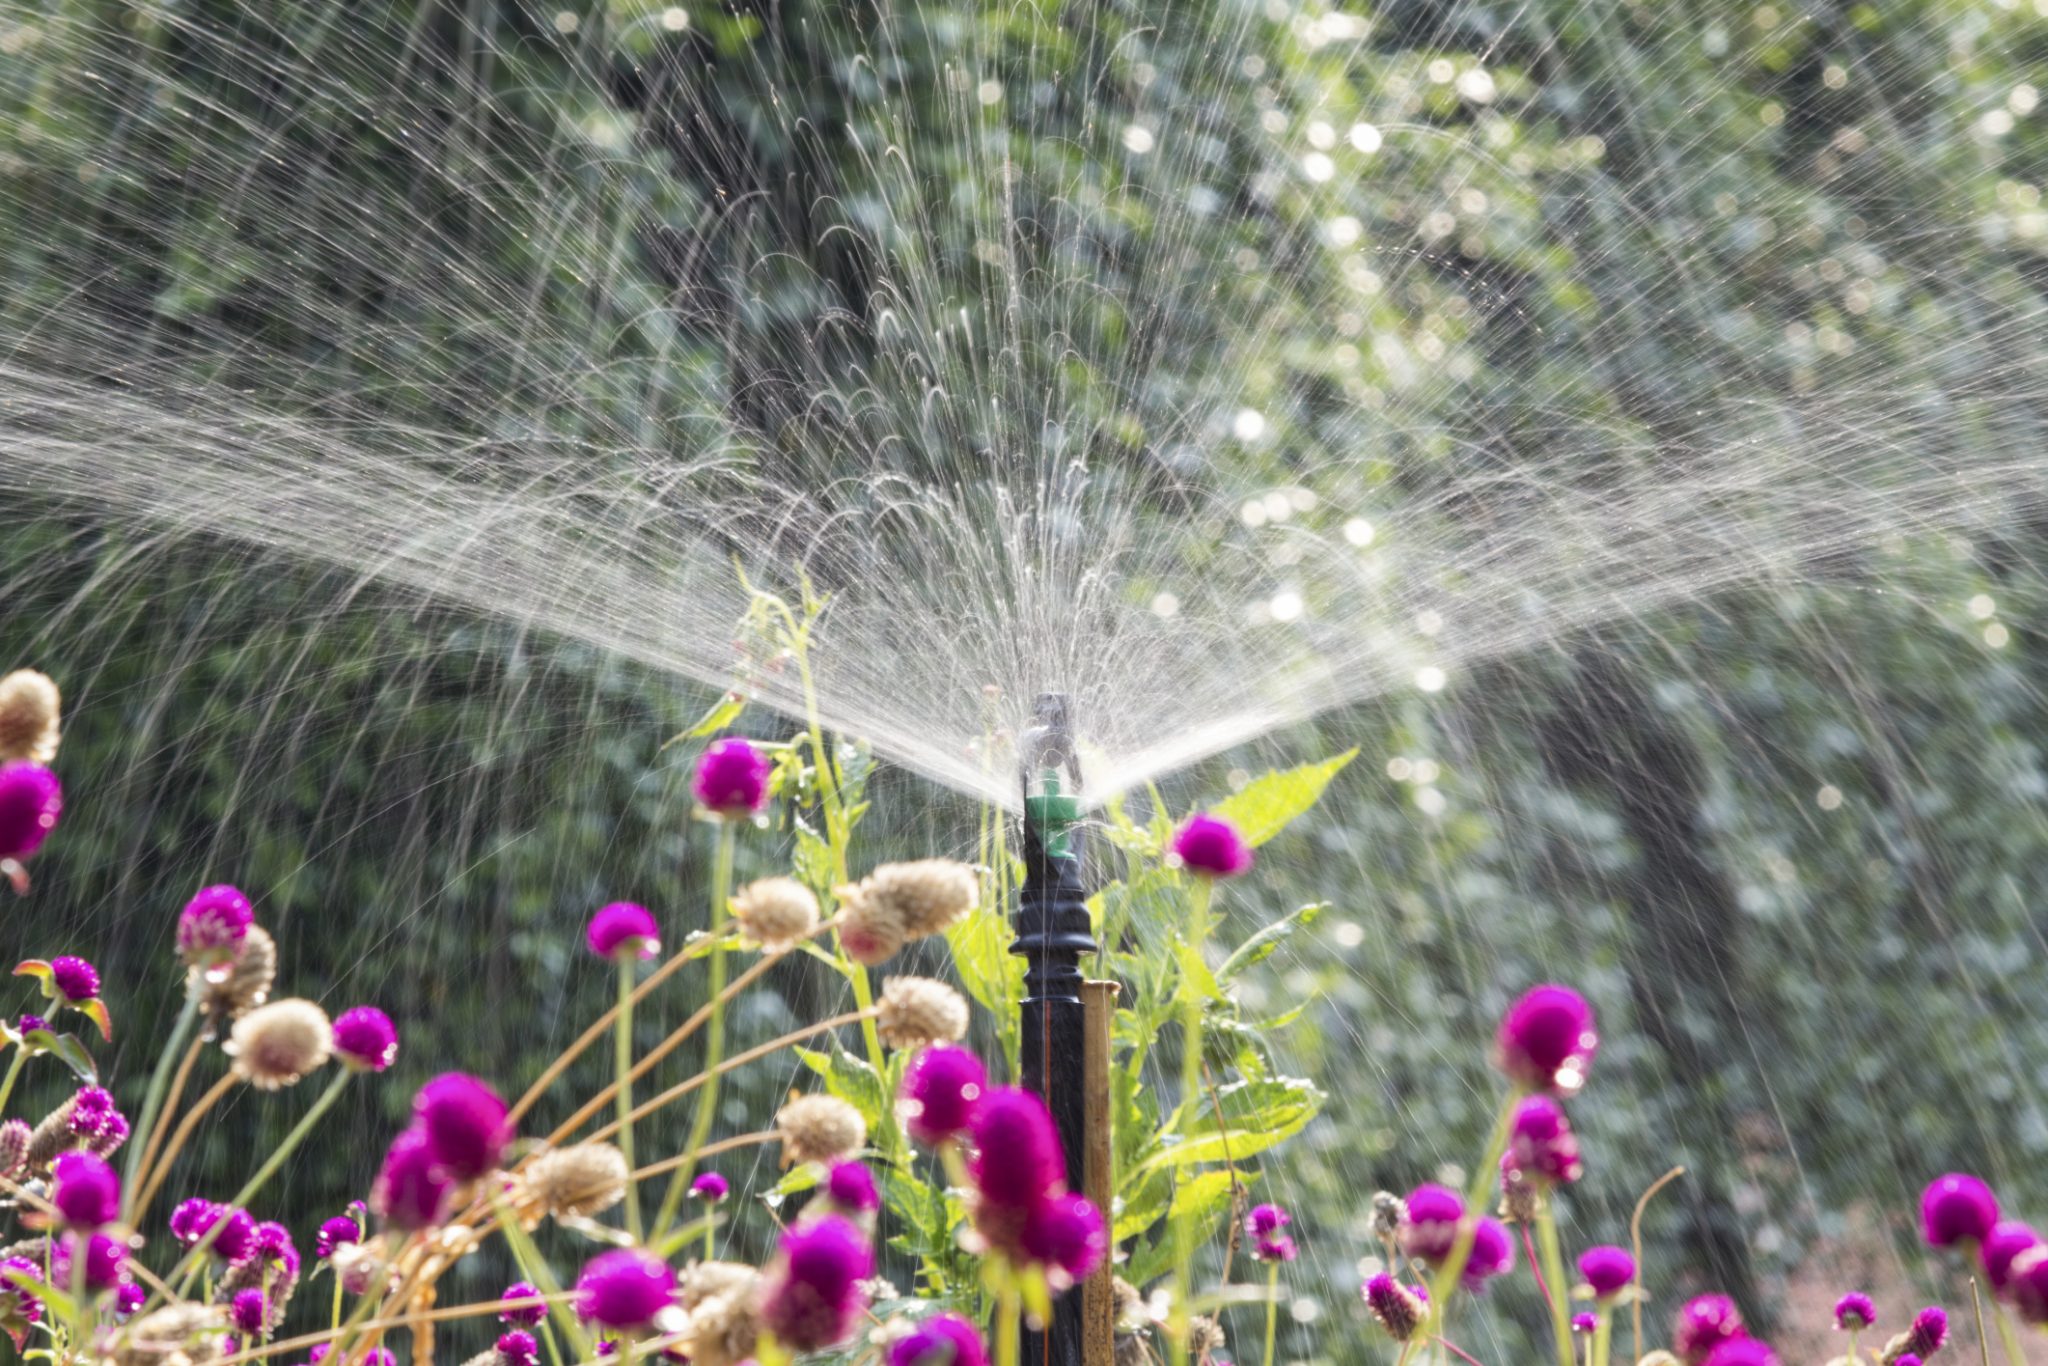 Sprinkler head watering the flowers in garden